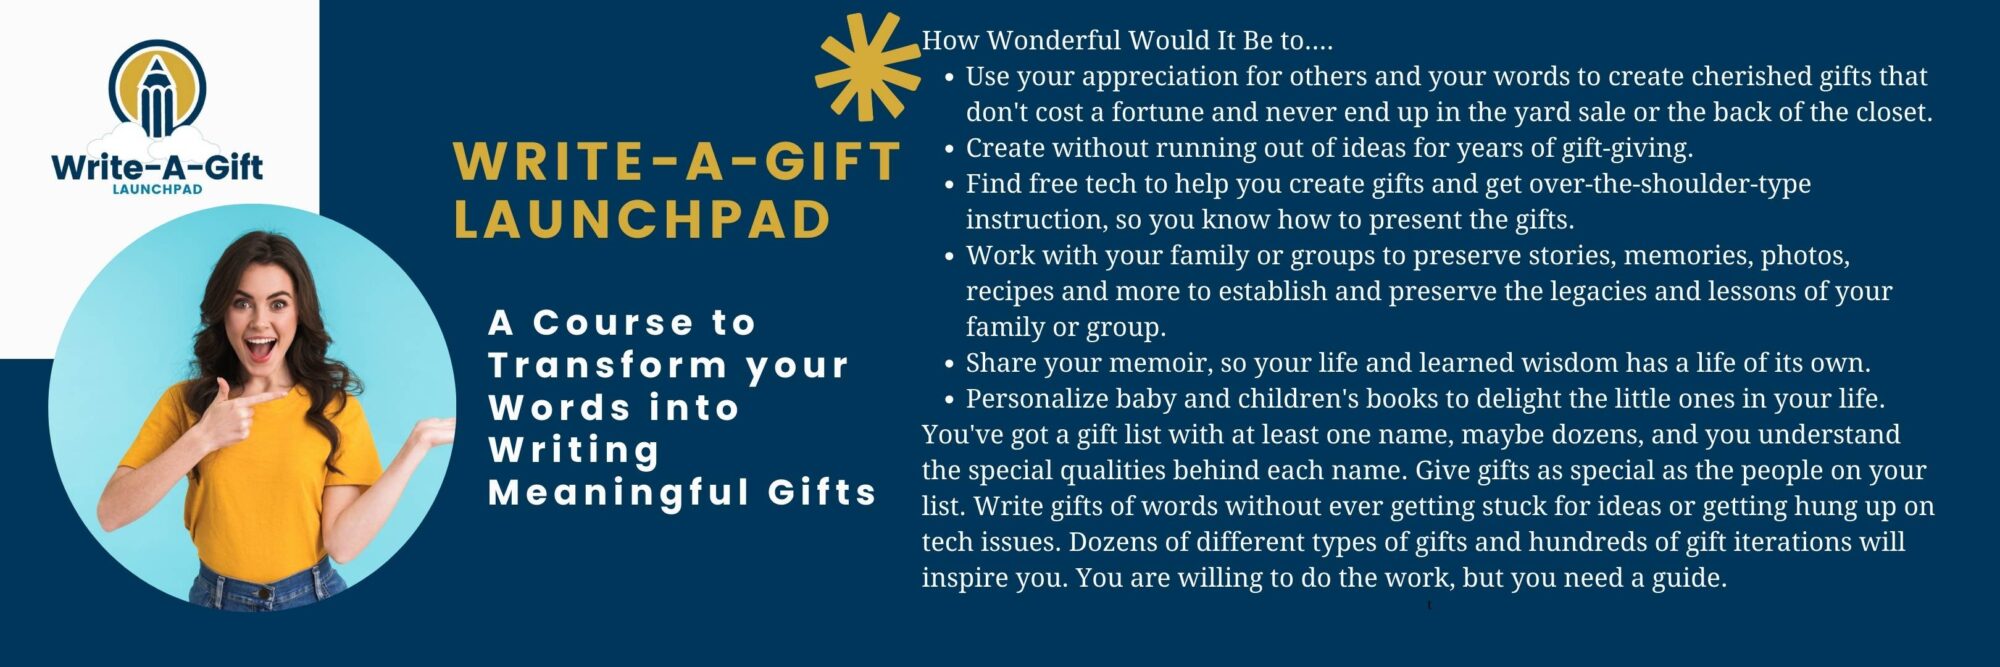 Write-a-gift